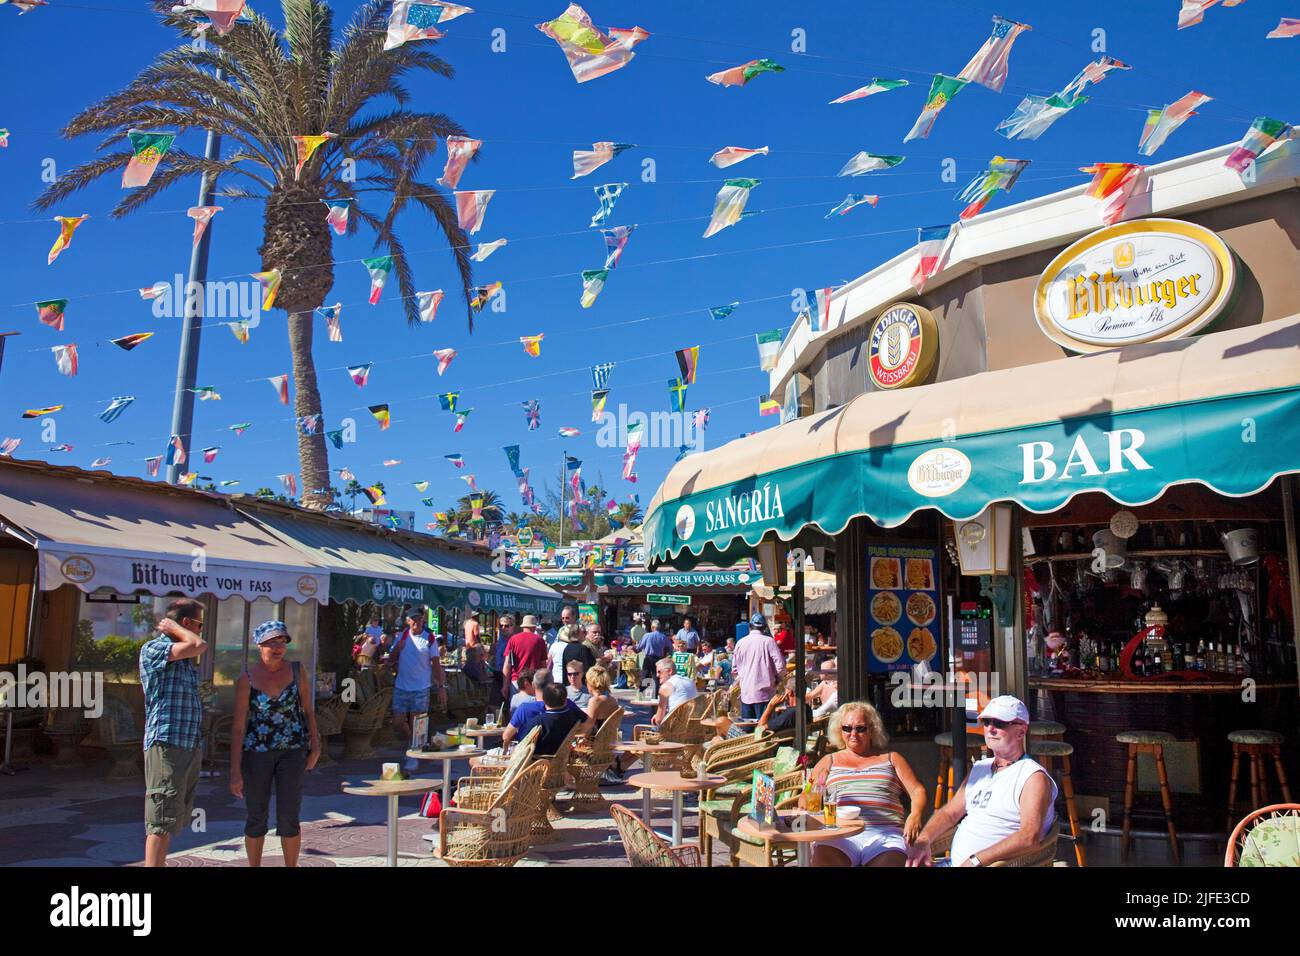 Geschäfte, Bars und Restaurants an der Strandpromenade, Playa del Ingles, Gran Canaria, Kanarische Inseln, Spanien, Europa | Geschäfte, Bars und Restaurants a Stockfoto